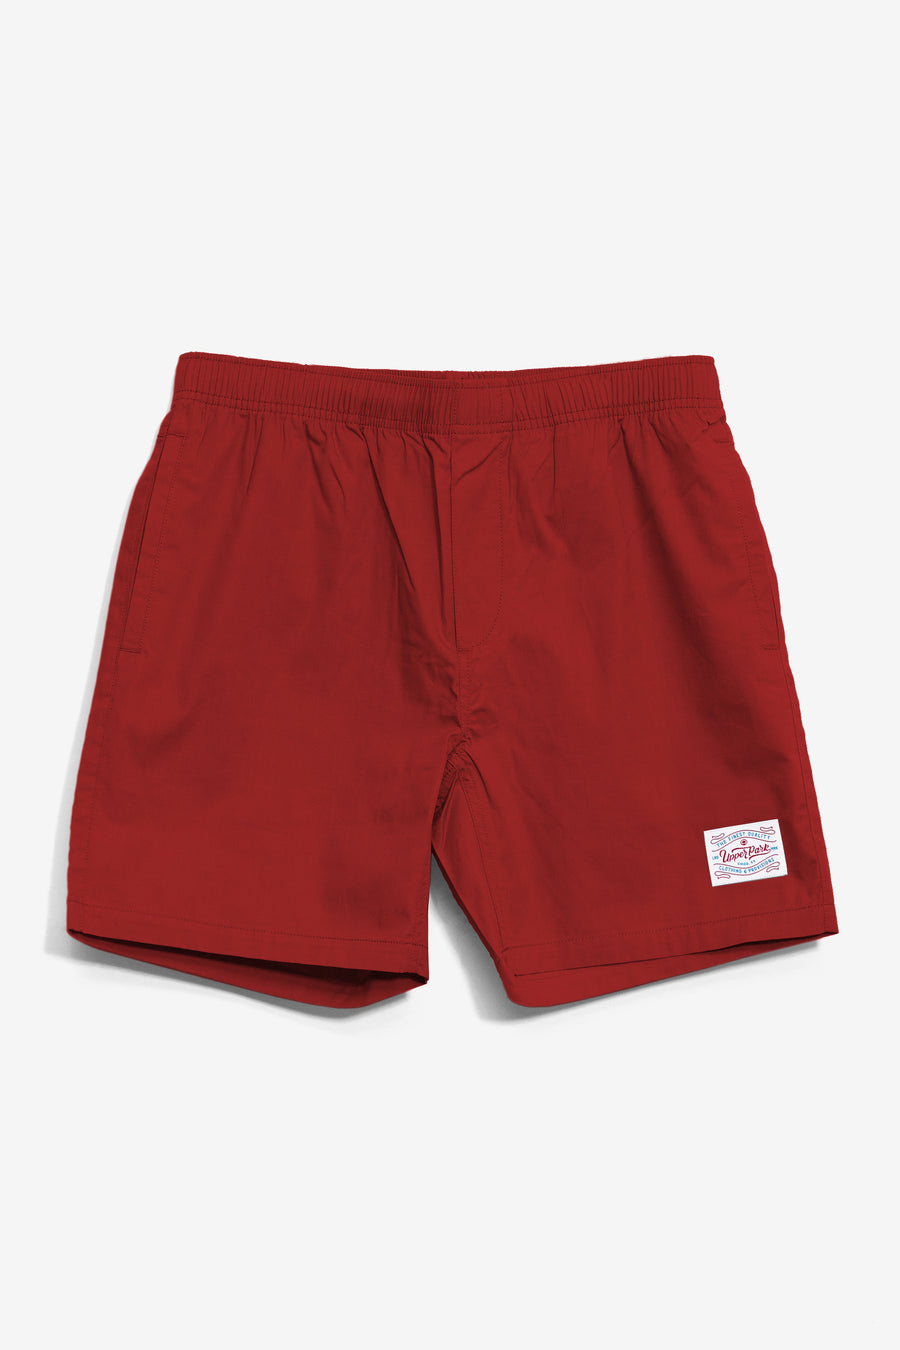 Retro Pro Label 17" Beach Shorts - Cardinal